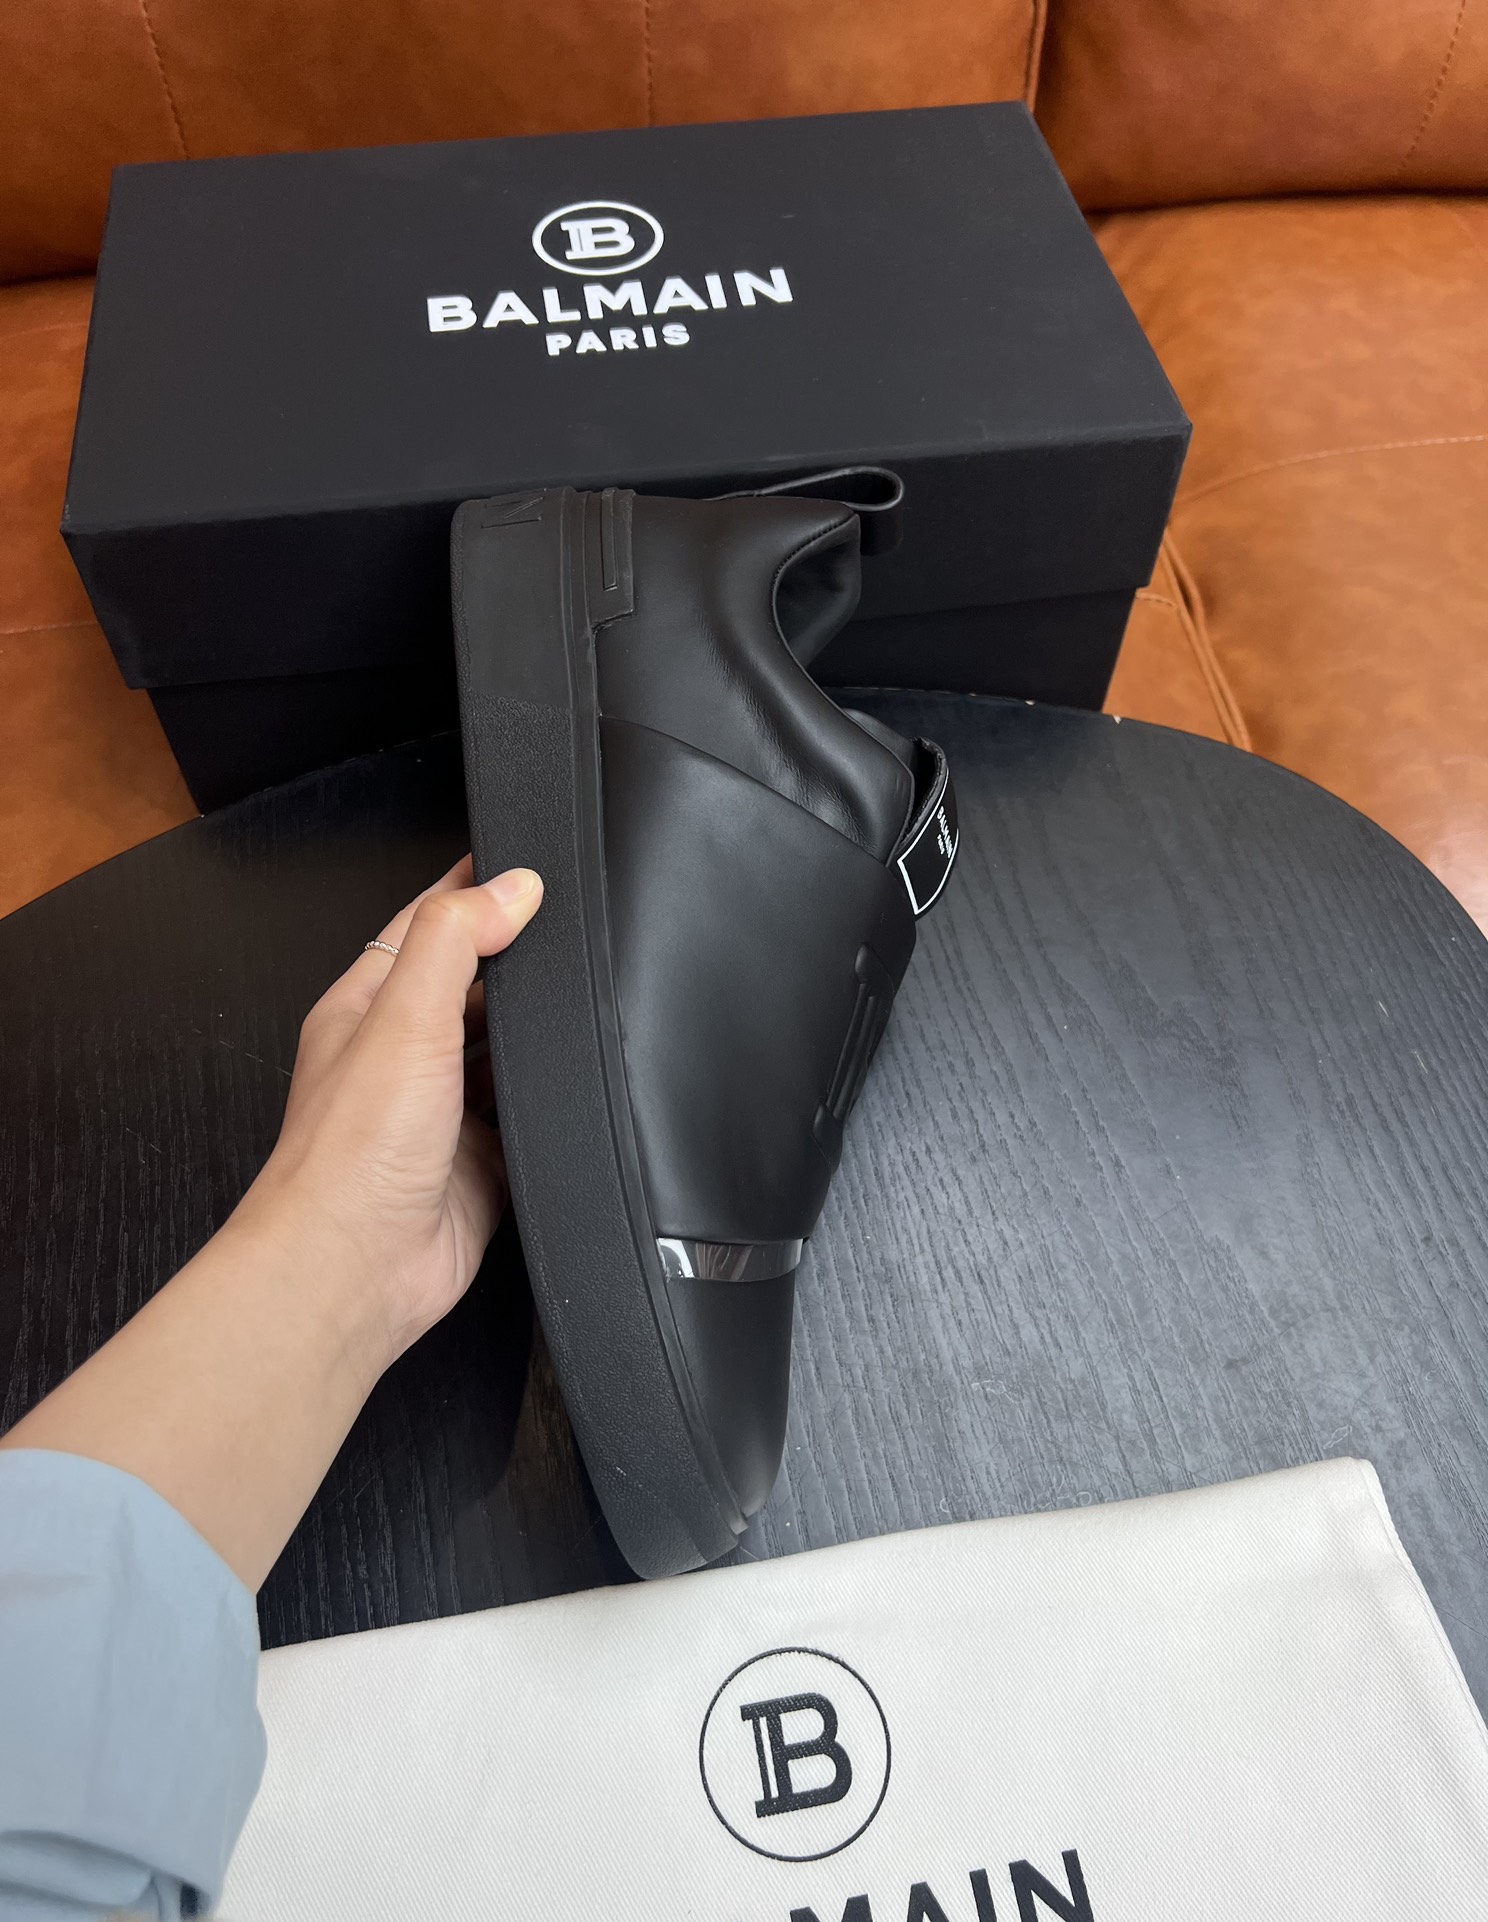 BALMAIN巴尔曼运动鞋 Explore our Sneaker hub - B-Court Easy 黑色小牛皮运动鞋 鞋舌饰以皮革饰片及蓝色Balmain 徽标印纹，黑色 鞋底饰以同色系 Balmain 徽标印纹。 码数：38-45